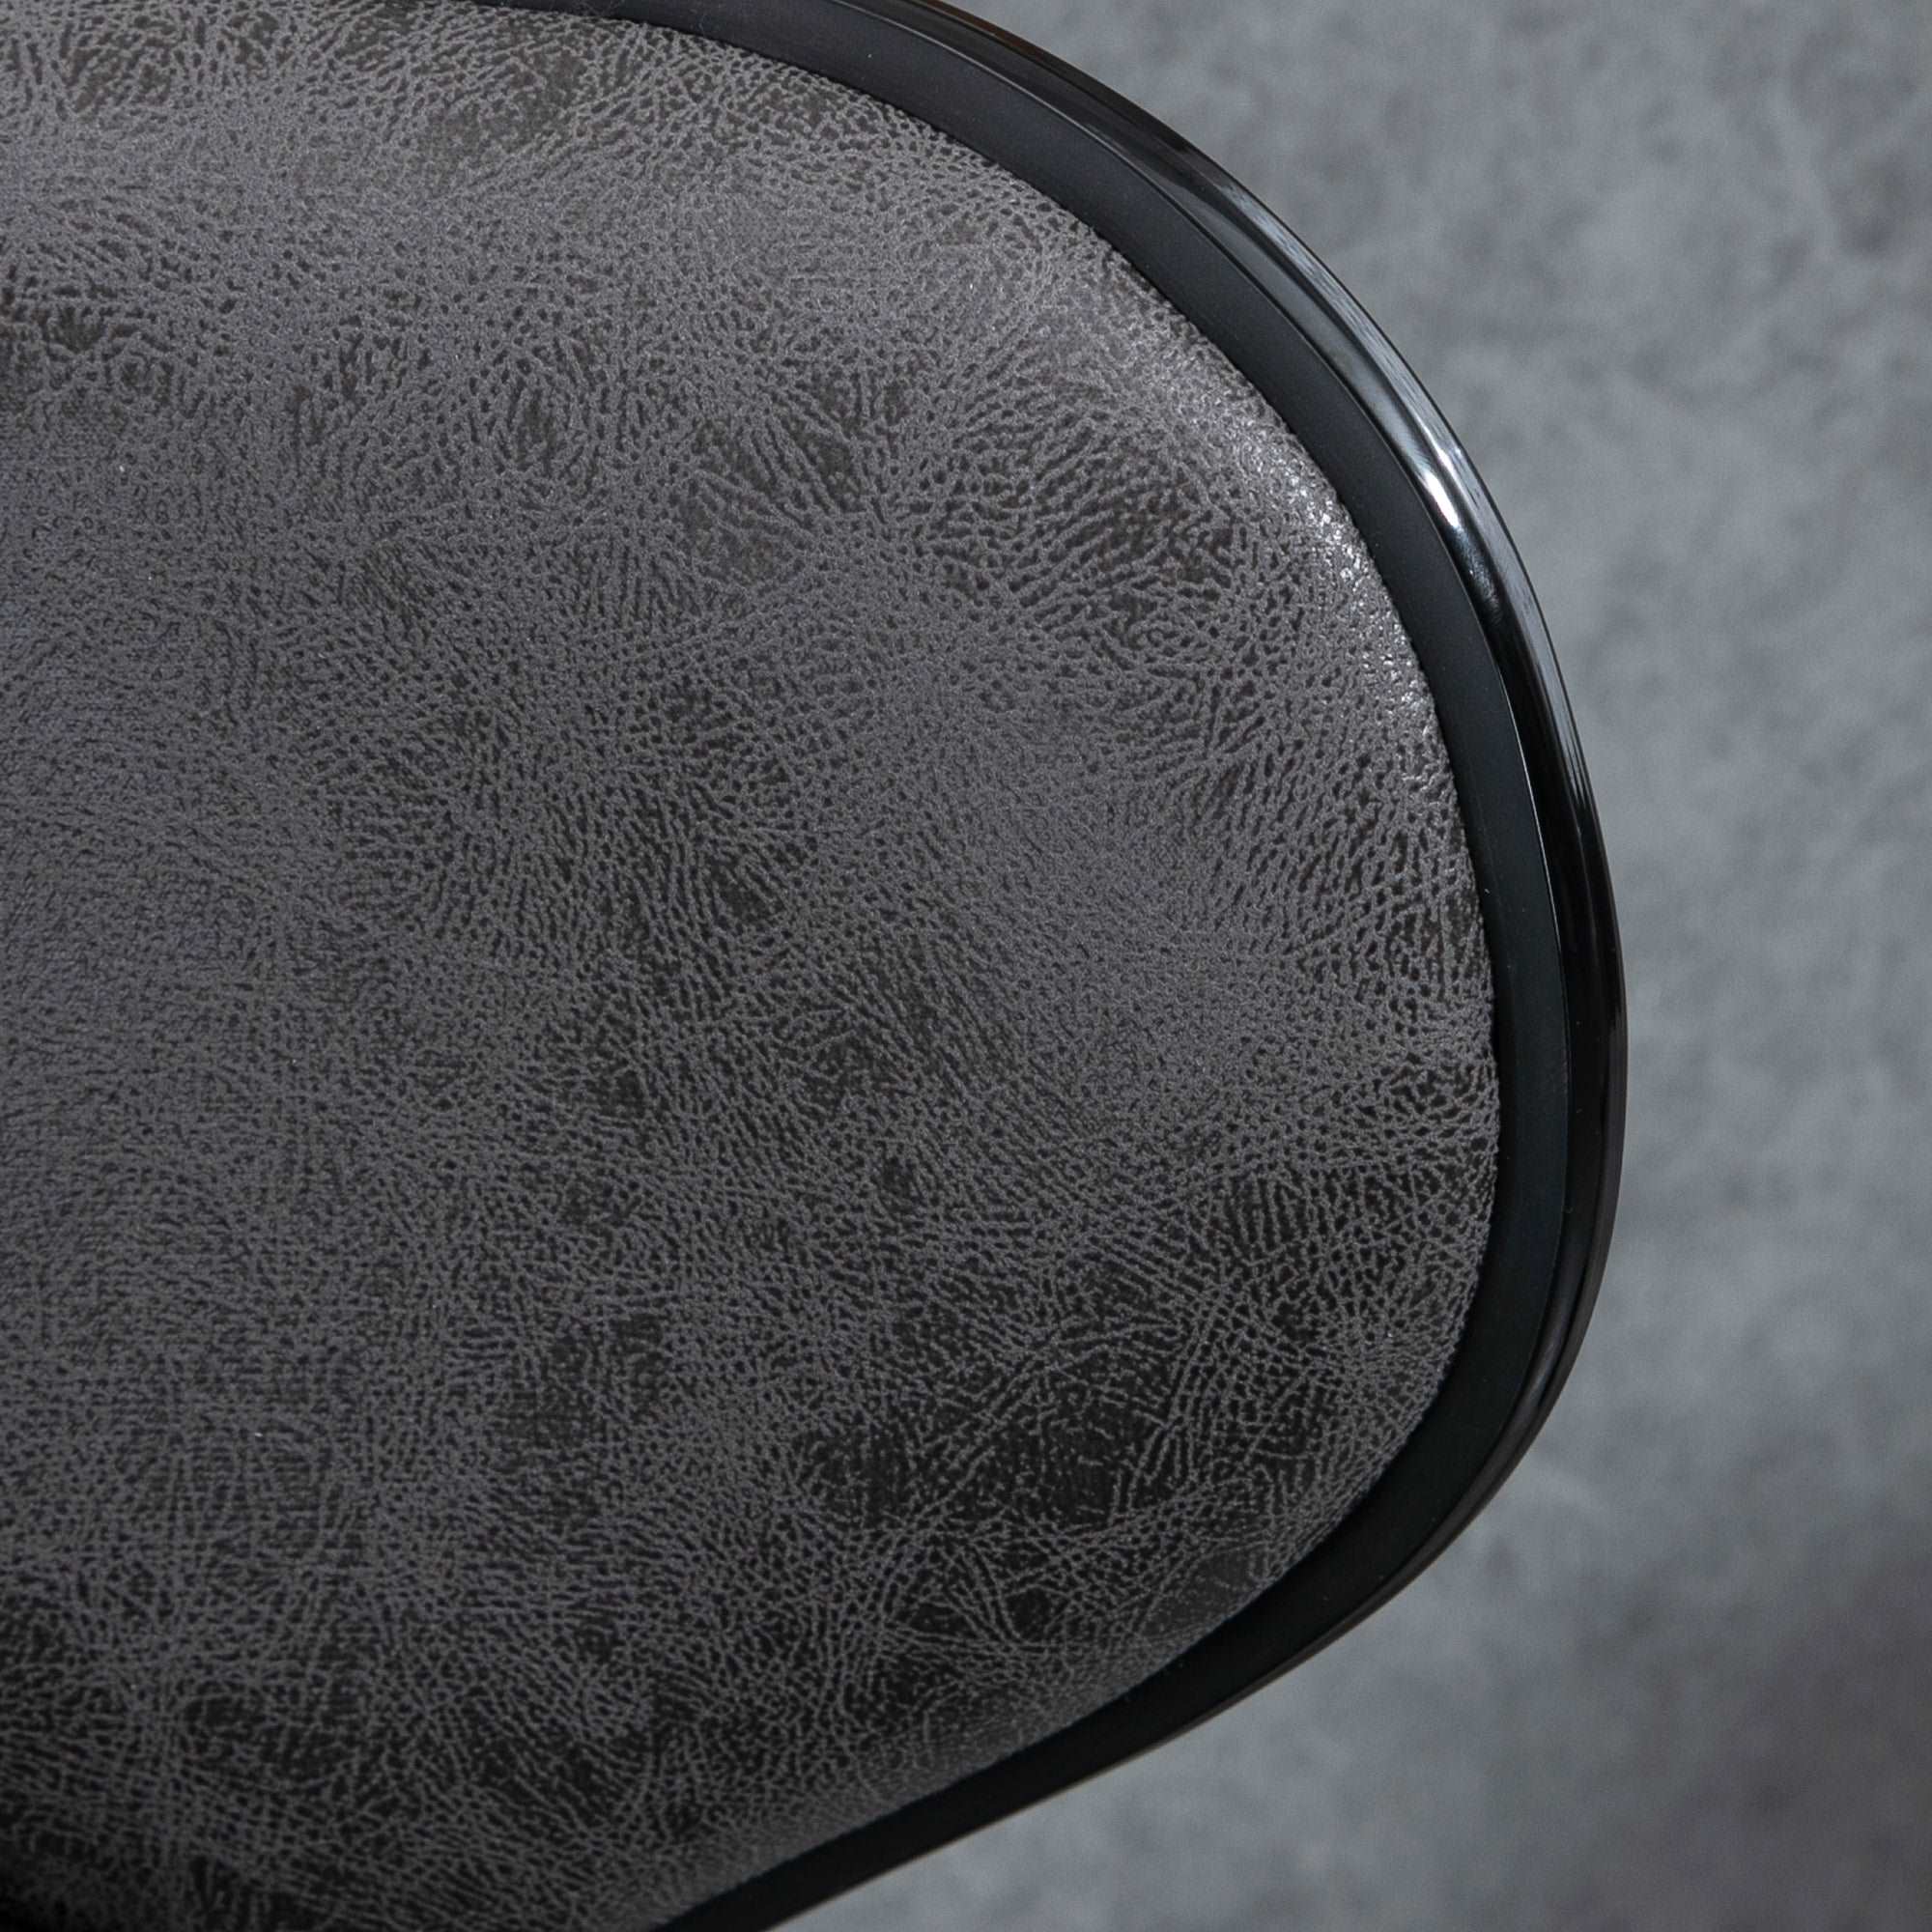 Bar Stool Set of 2 Microfiber Cloth Adjustable Height Armless Chairs with Swivel Seat, Dark Grey  AOSOM   